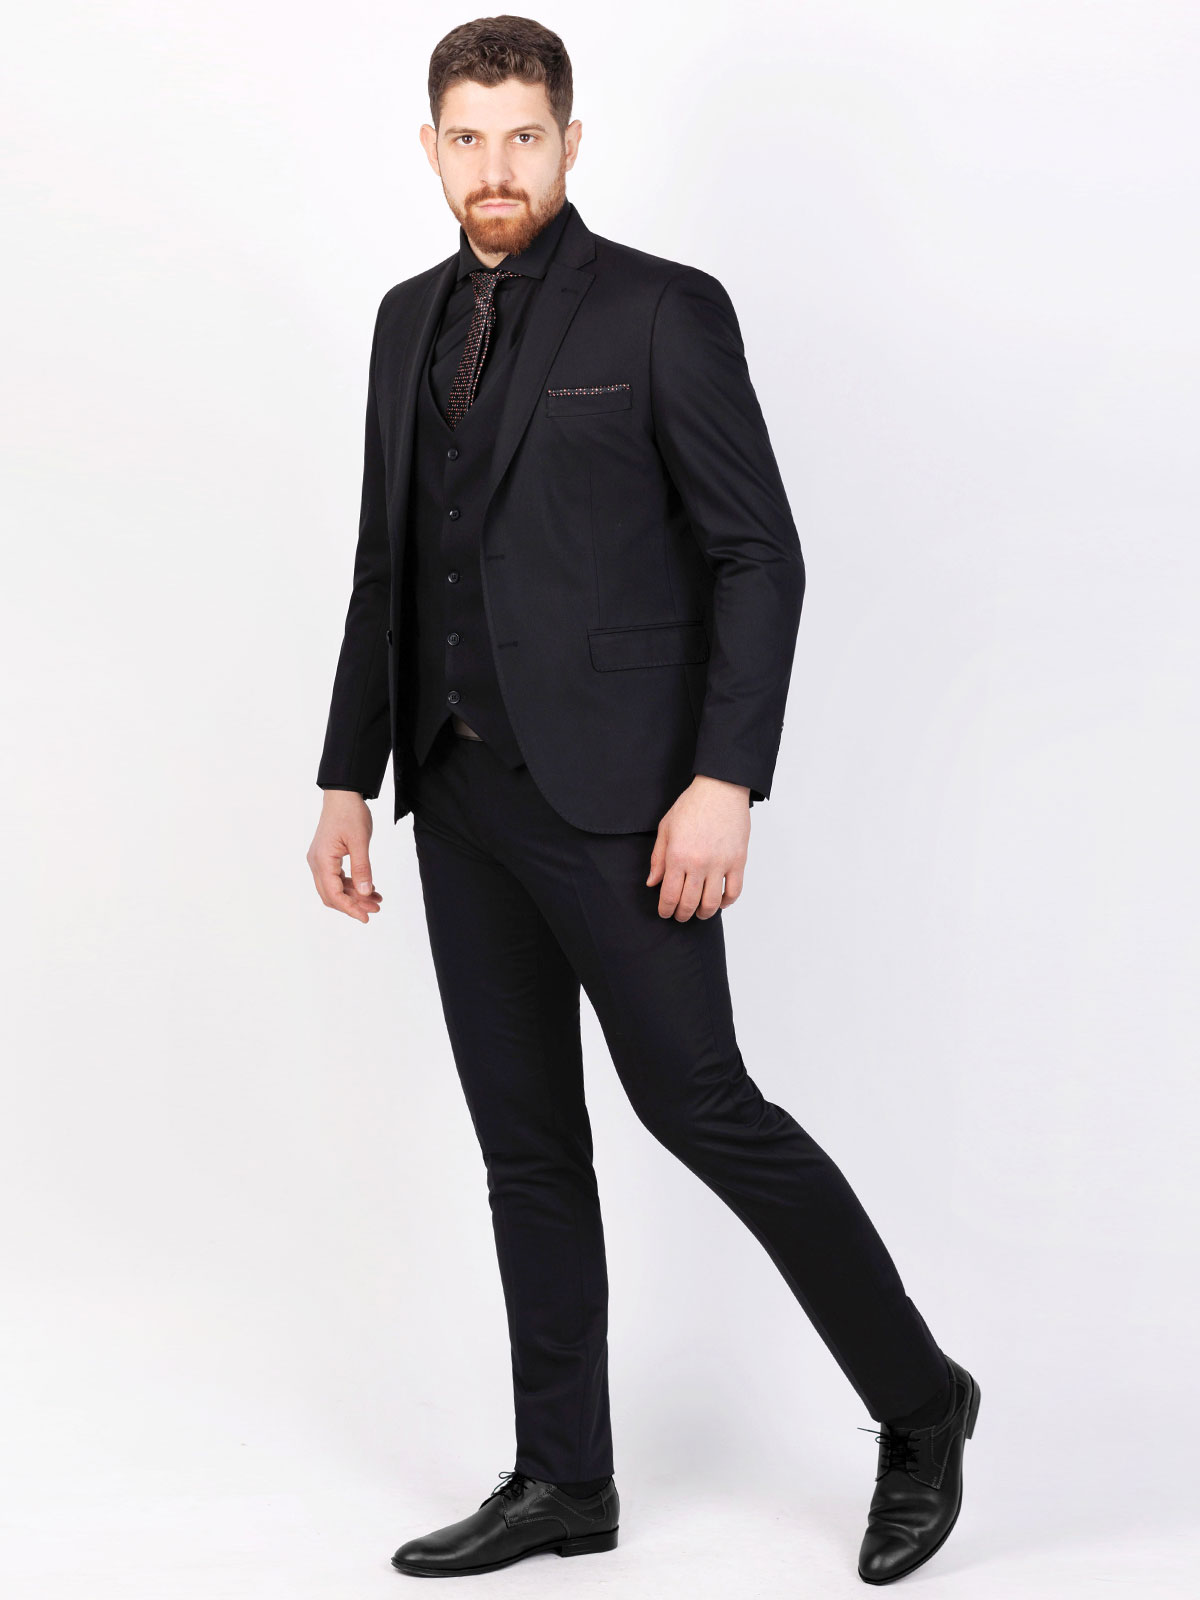 Jachetă neagră elegantă - 64120 € 141.73 img2